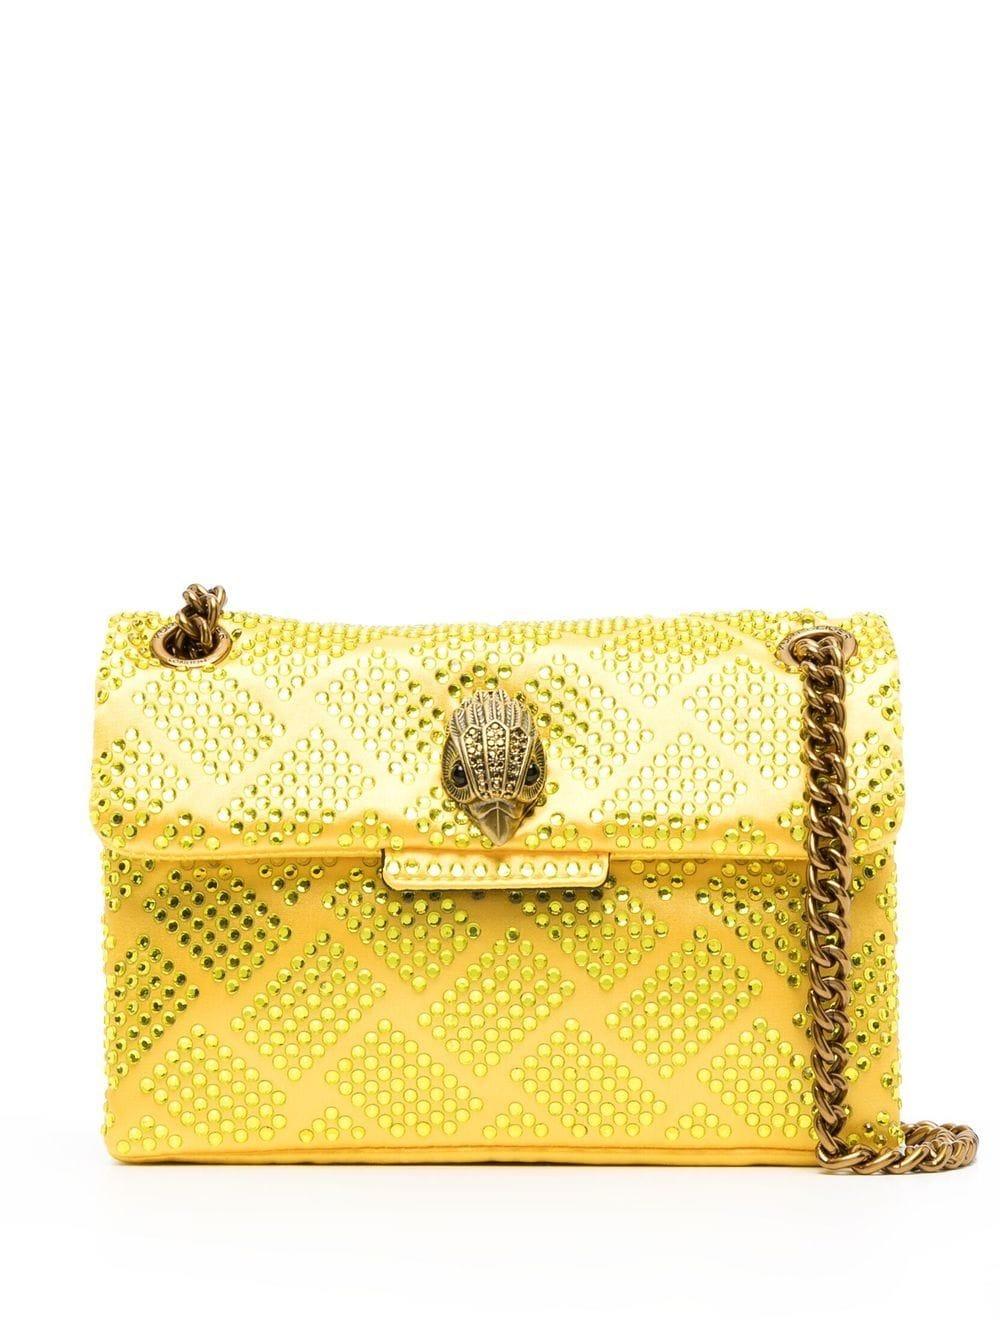 Kurt Geiger Mini Kensington Crystal-embellished Bag in Yellow | Lyst